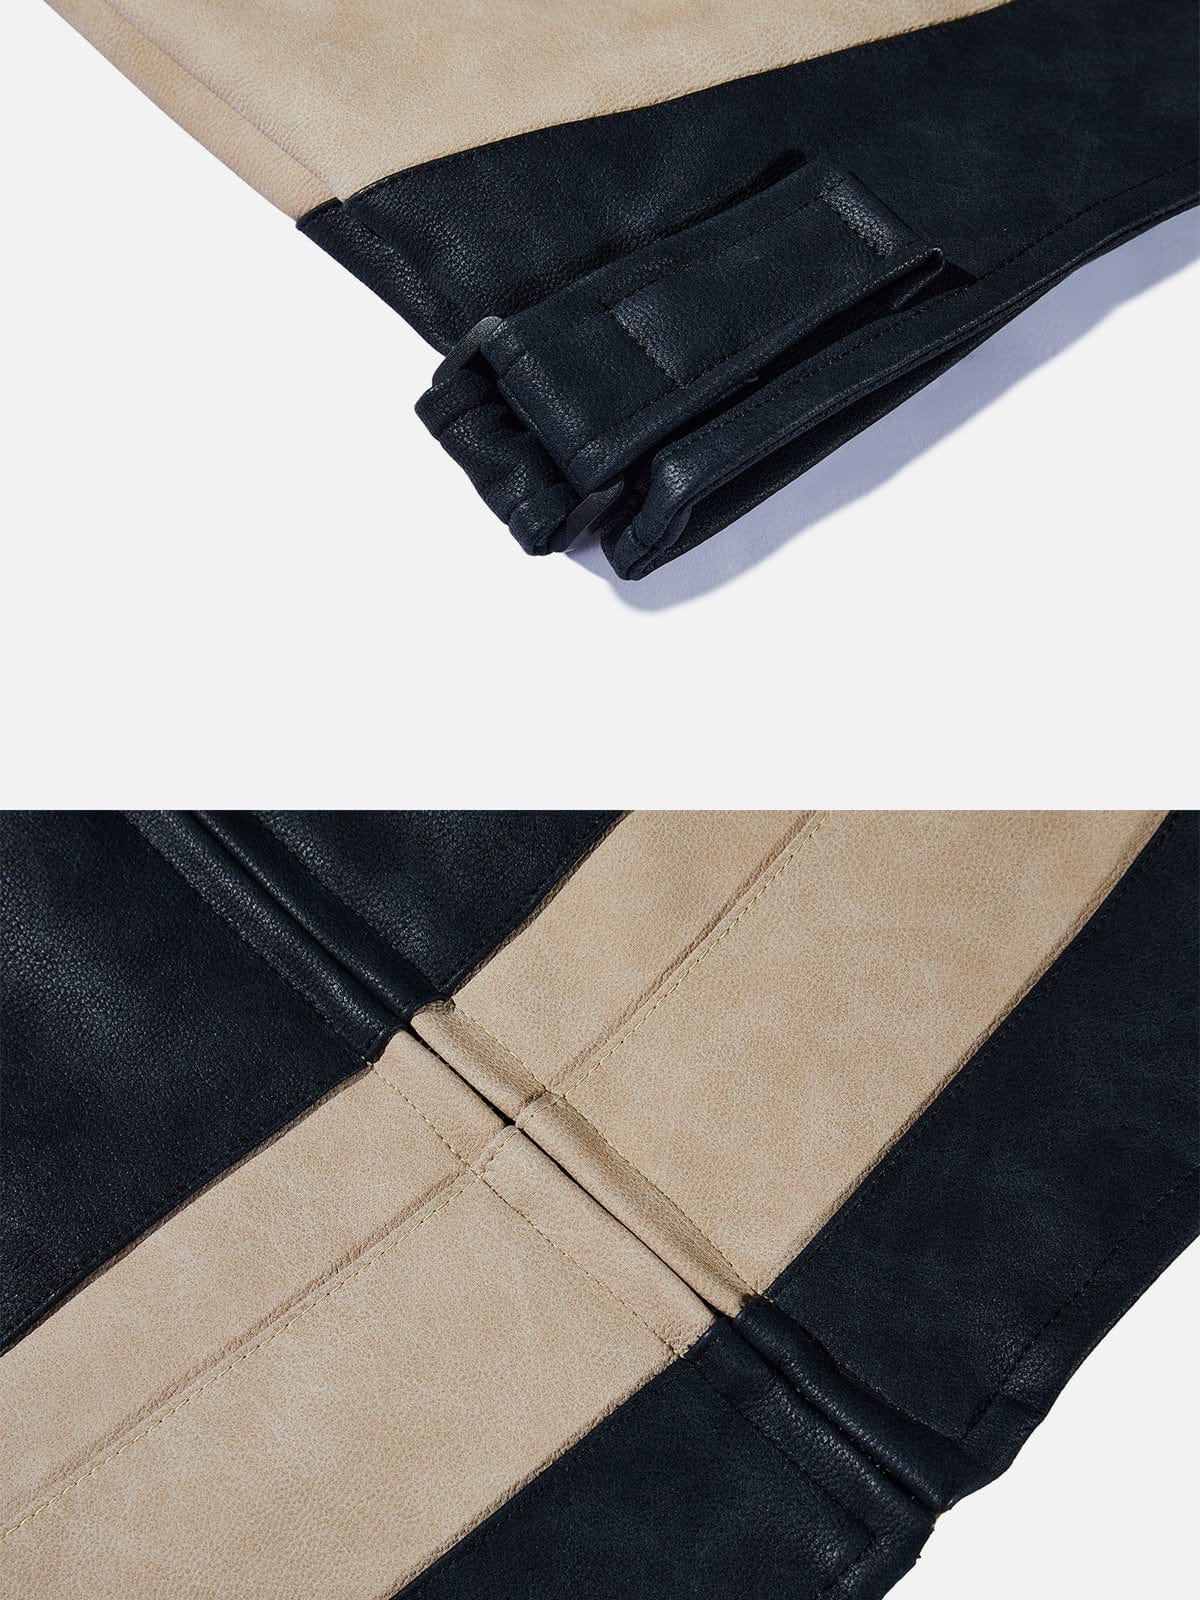 NEV Structured Line Patchwork Leather Jacket